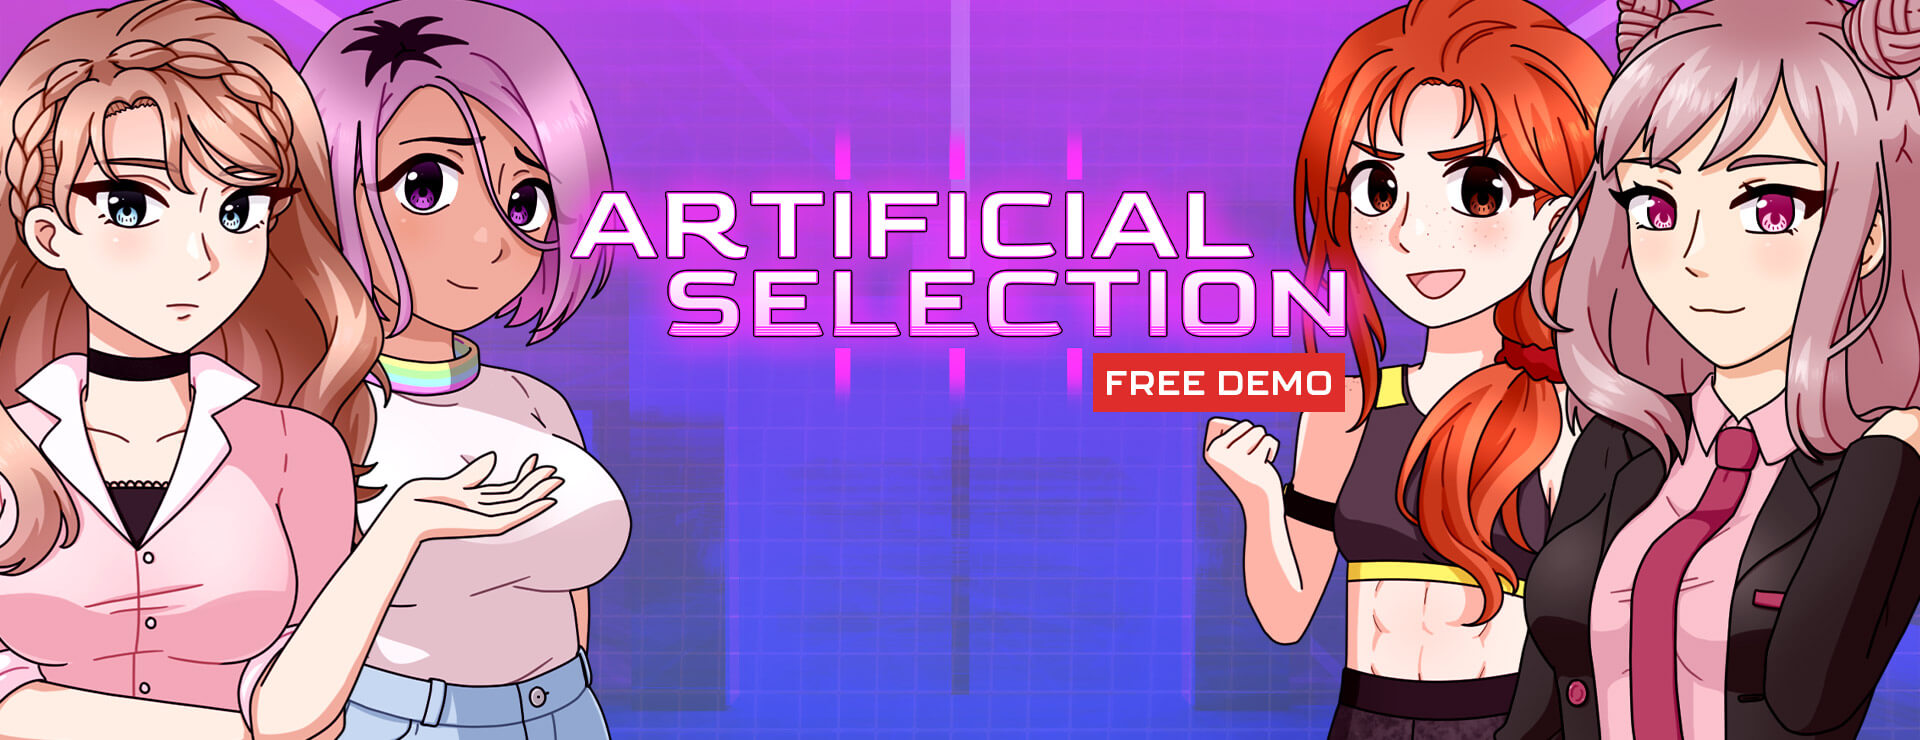 Artificial Selection (Demo Version) - Powieść wizualna Gra